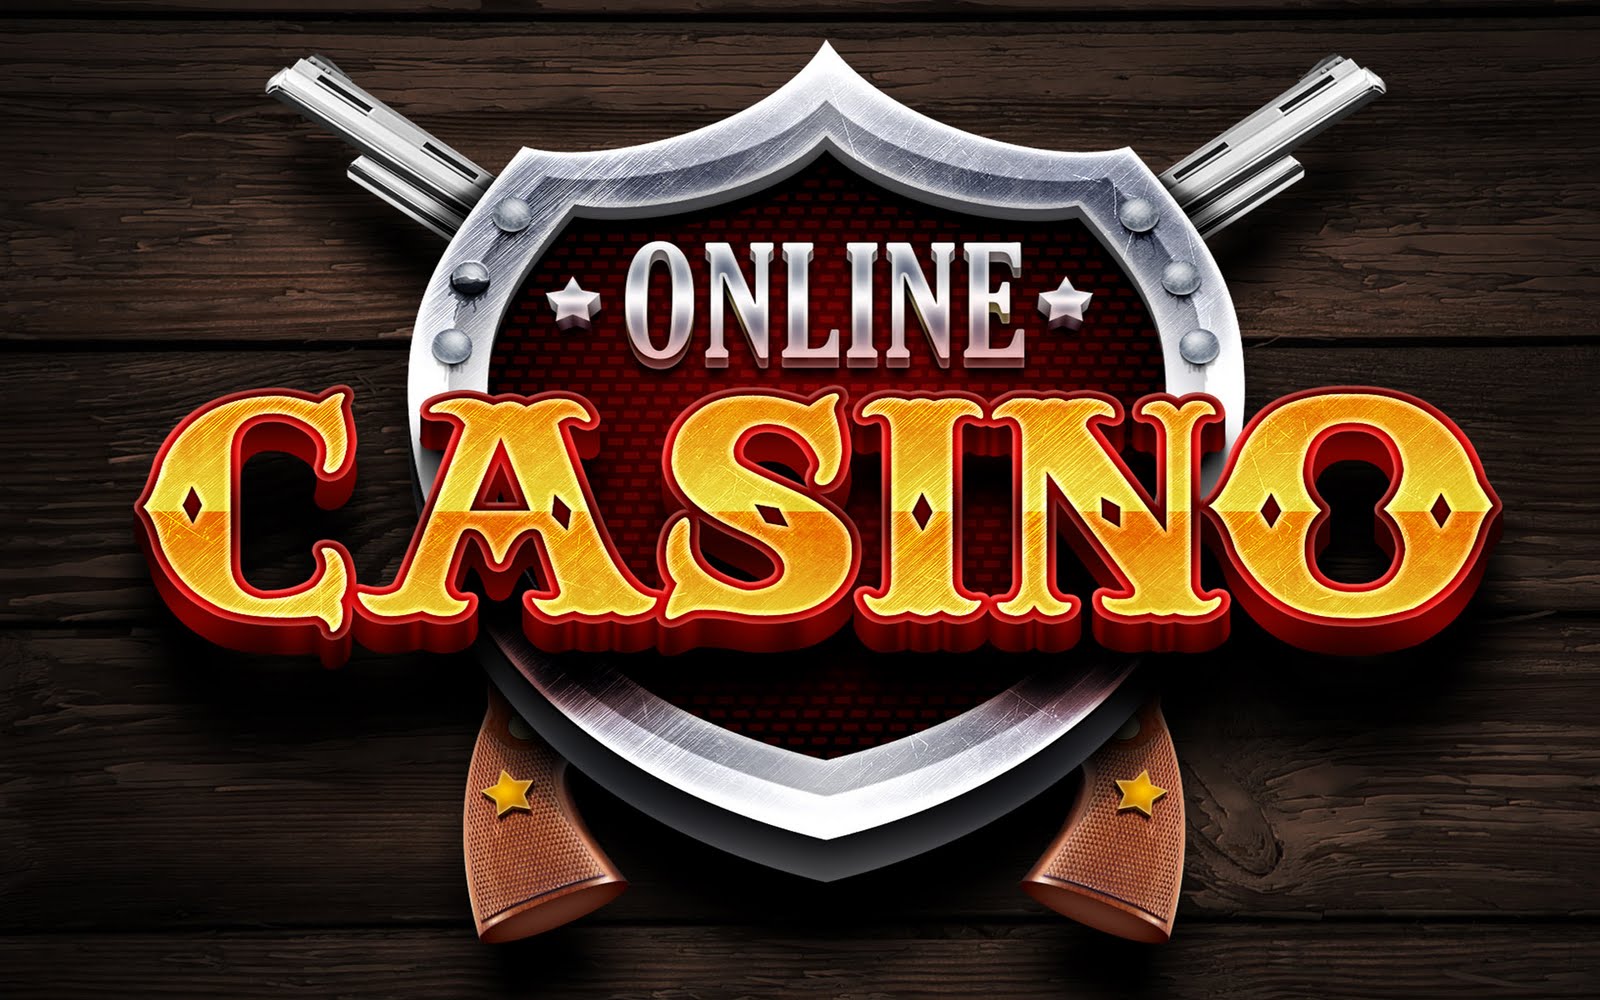 Online Casino Sign